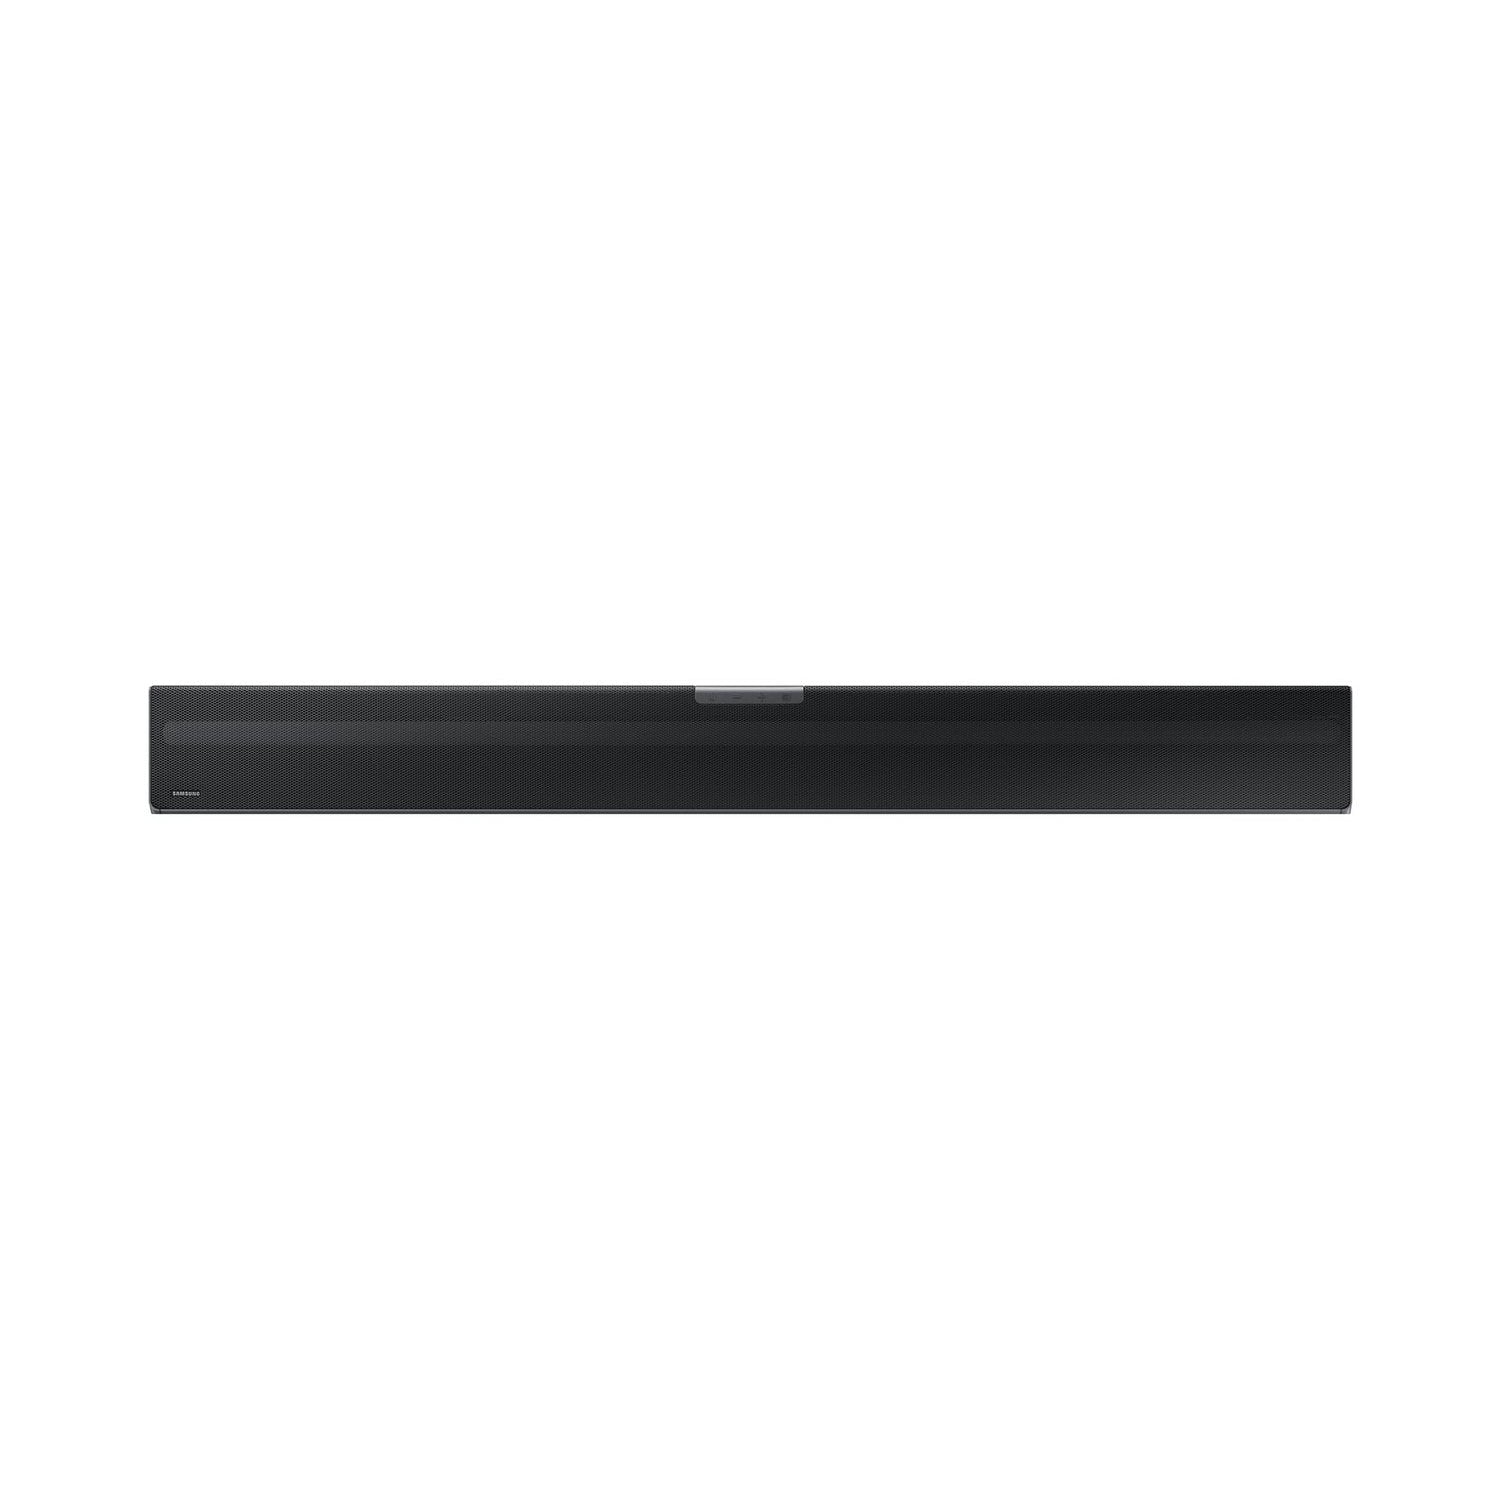 Samsung HW-Q600A Bluetooth Cinematic Soundbar with Wireless Subwoofer - Refurbished Good